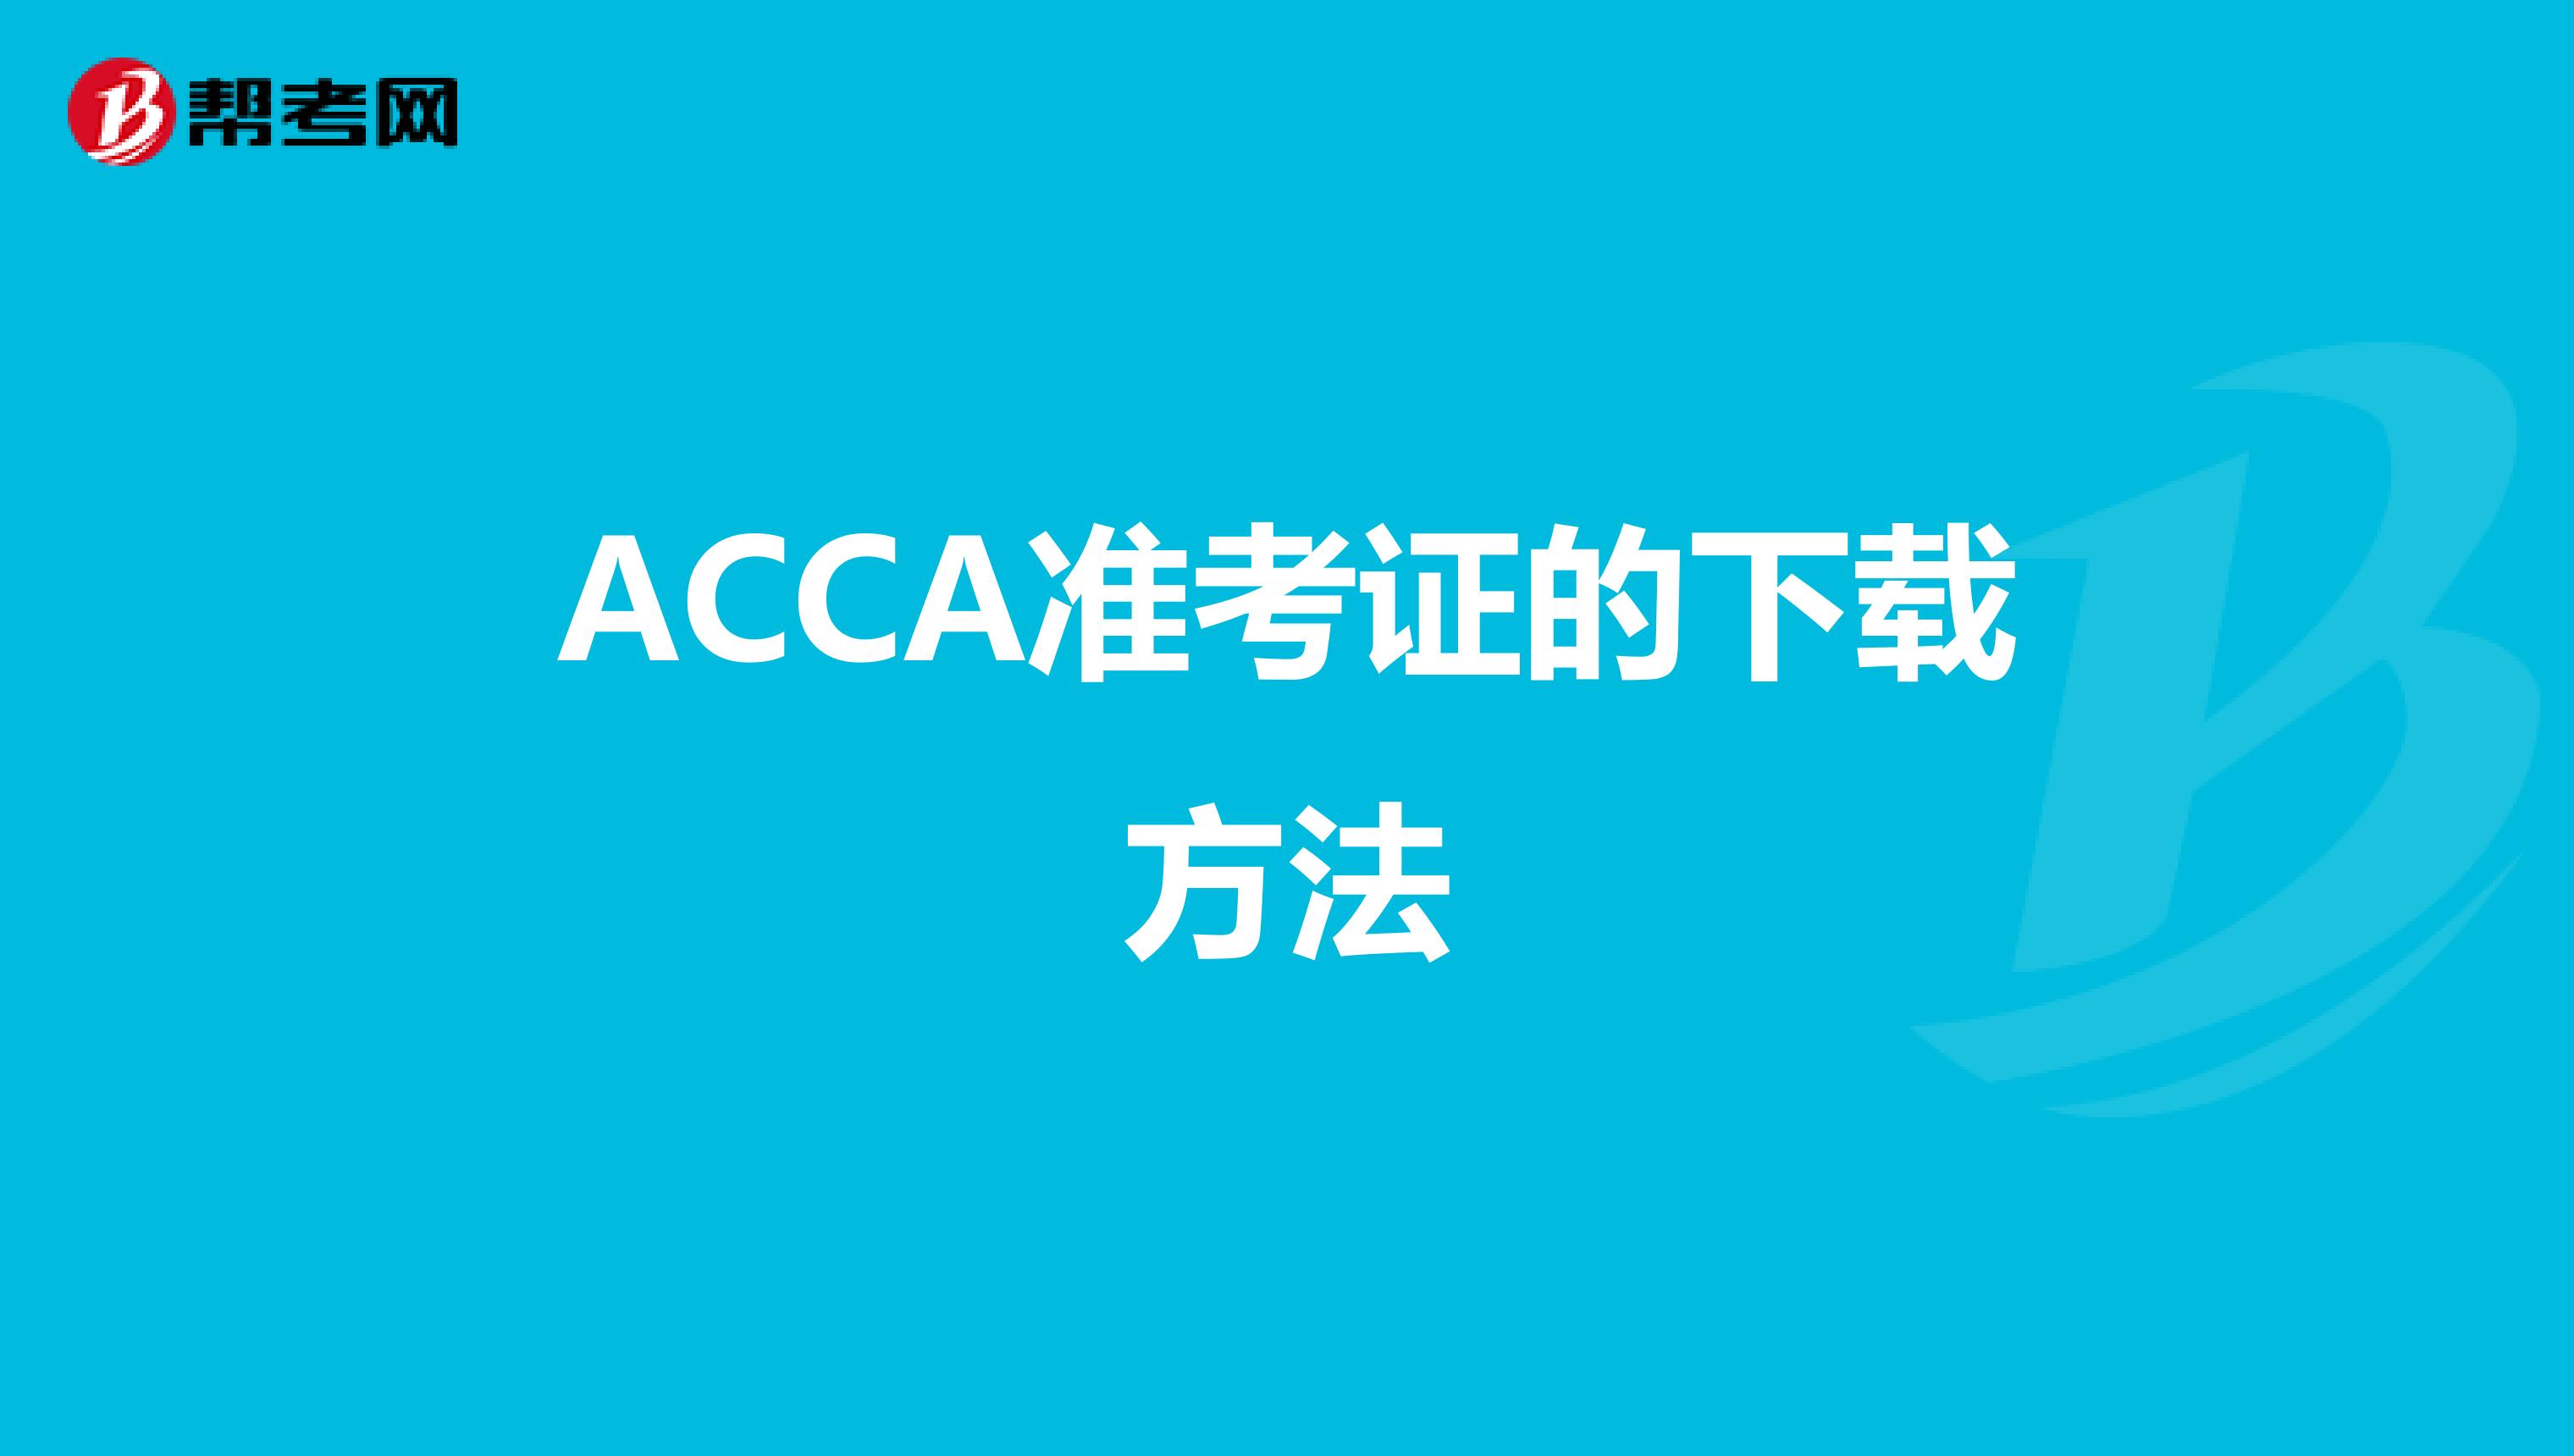 ACCA准考证的下载方法